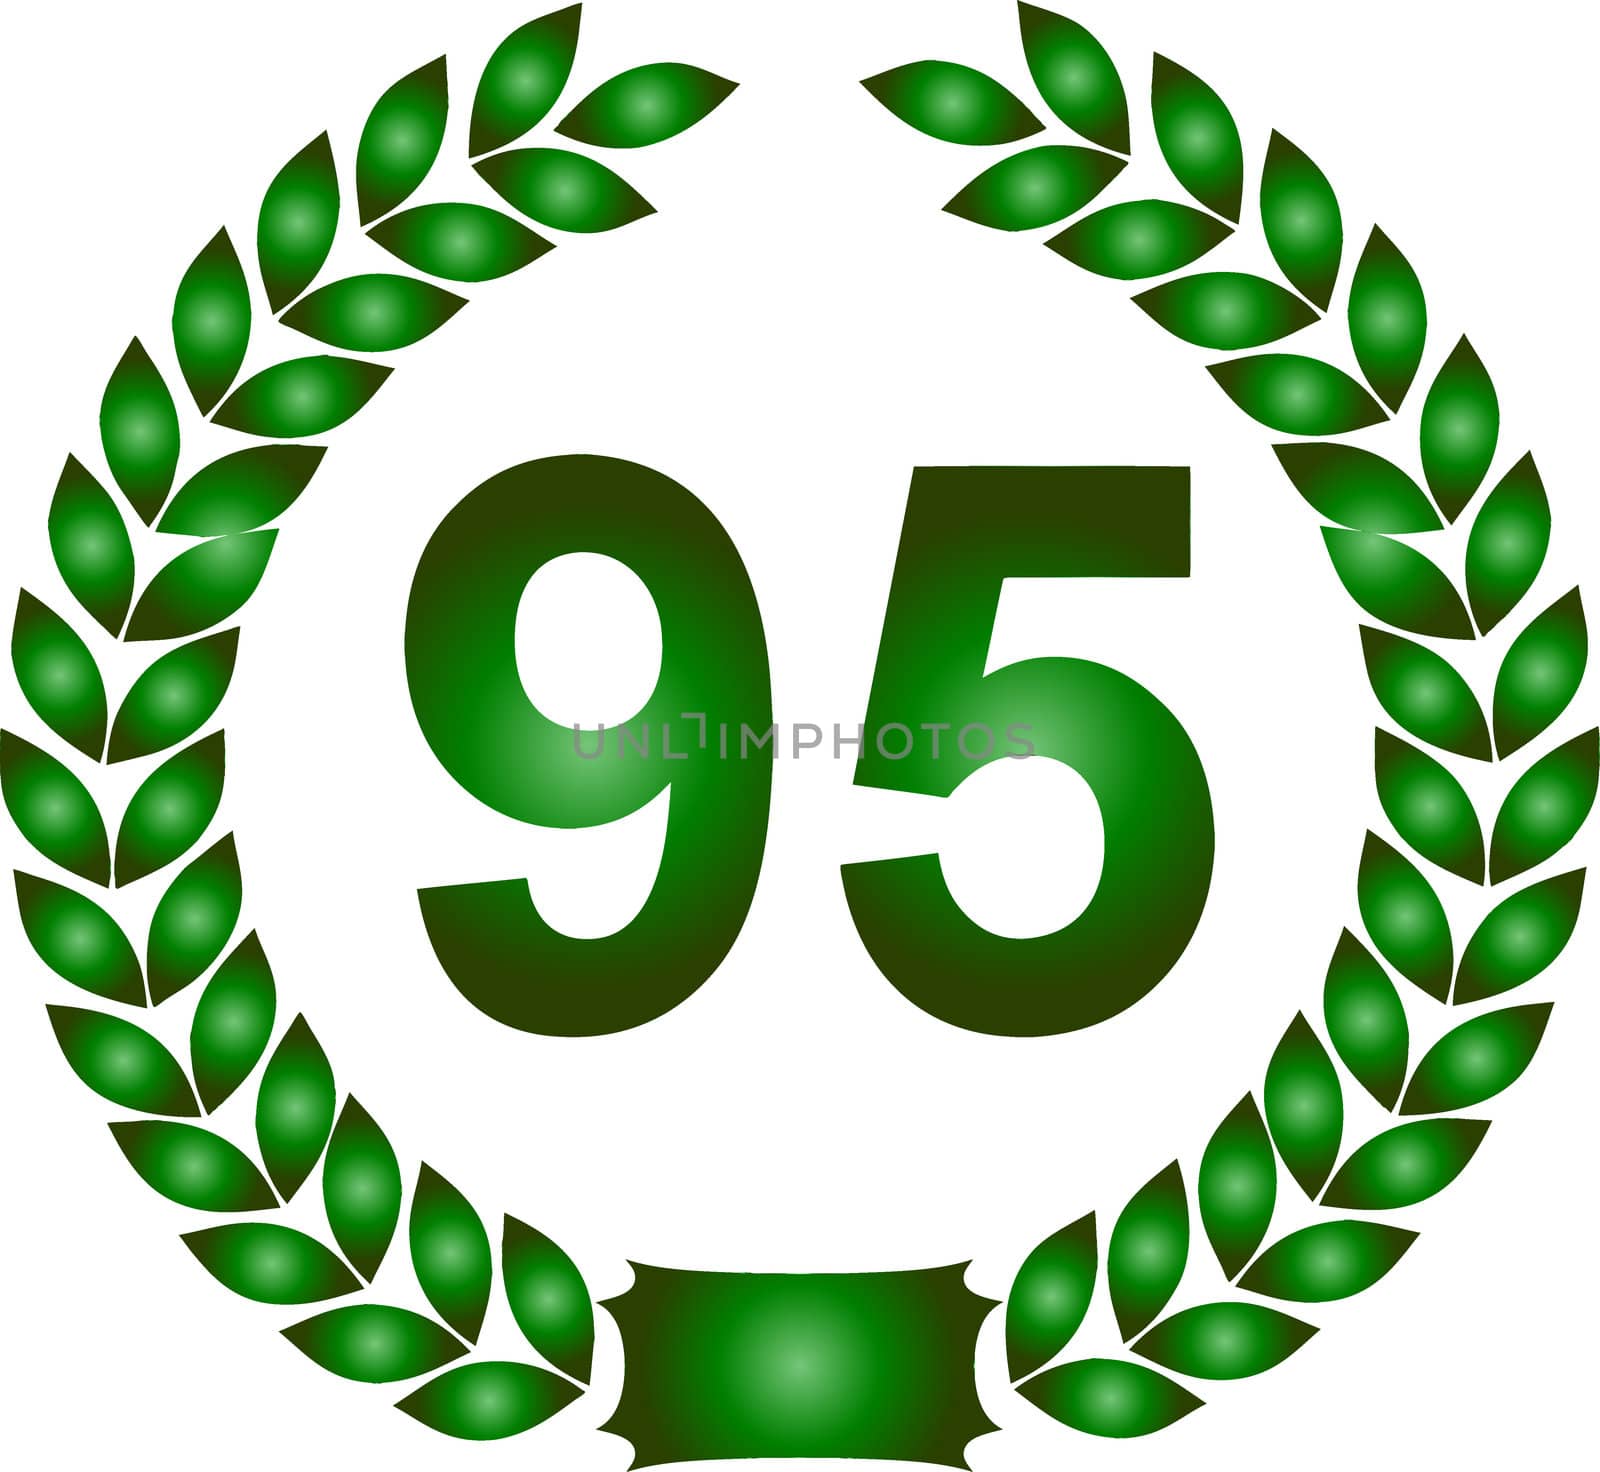 illustration of a green laurel wreath 95 years